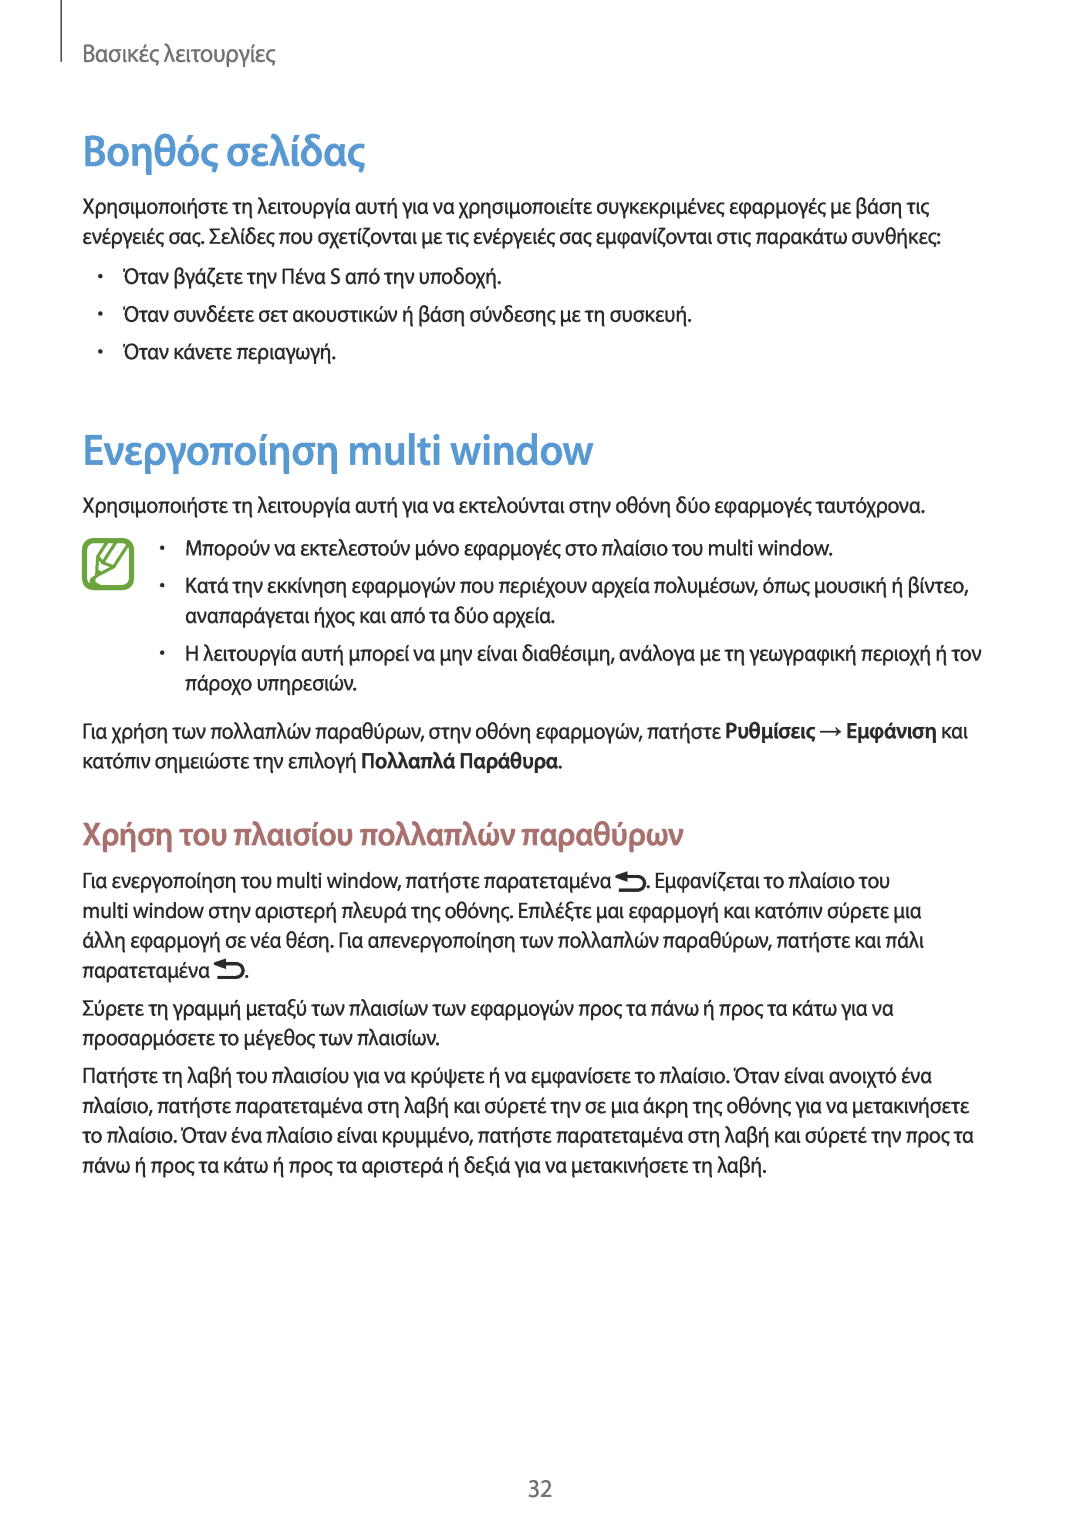 Samsung GT-N7100RWDCYV, GT-N7100TADCOS Βοηθός σελίδας, Ενεργοποίηση multi window, Χρήση του πλαισίου πολλαπλών παραθύρων 